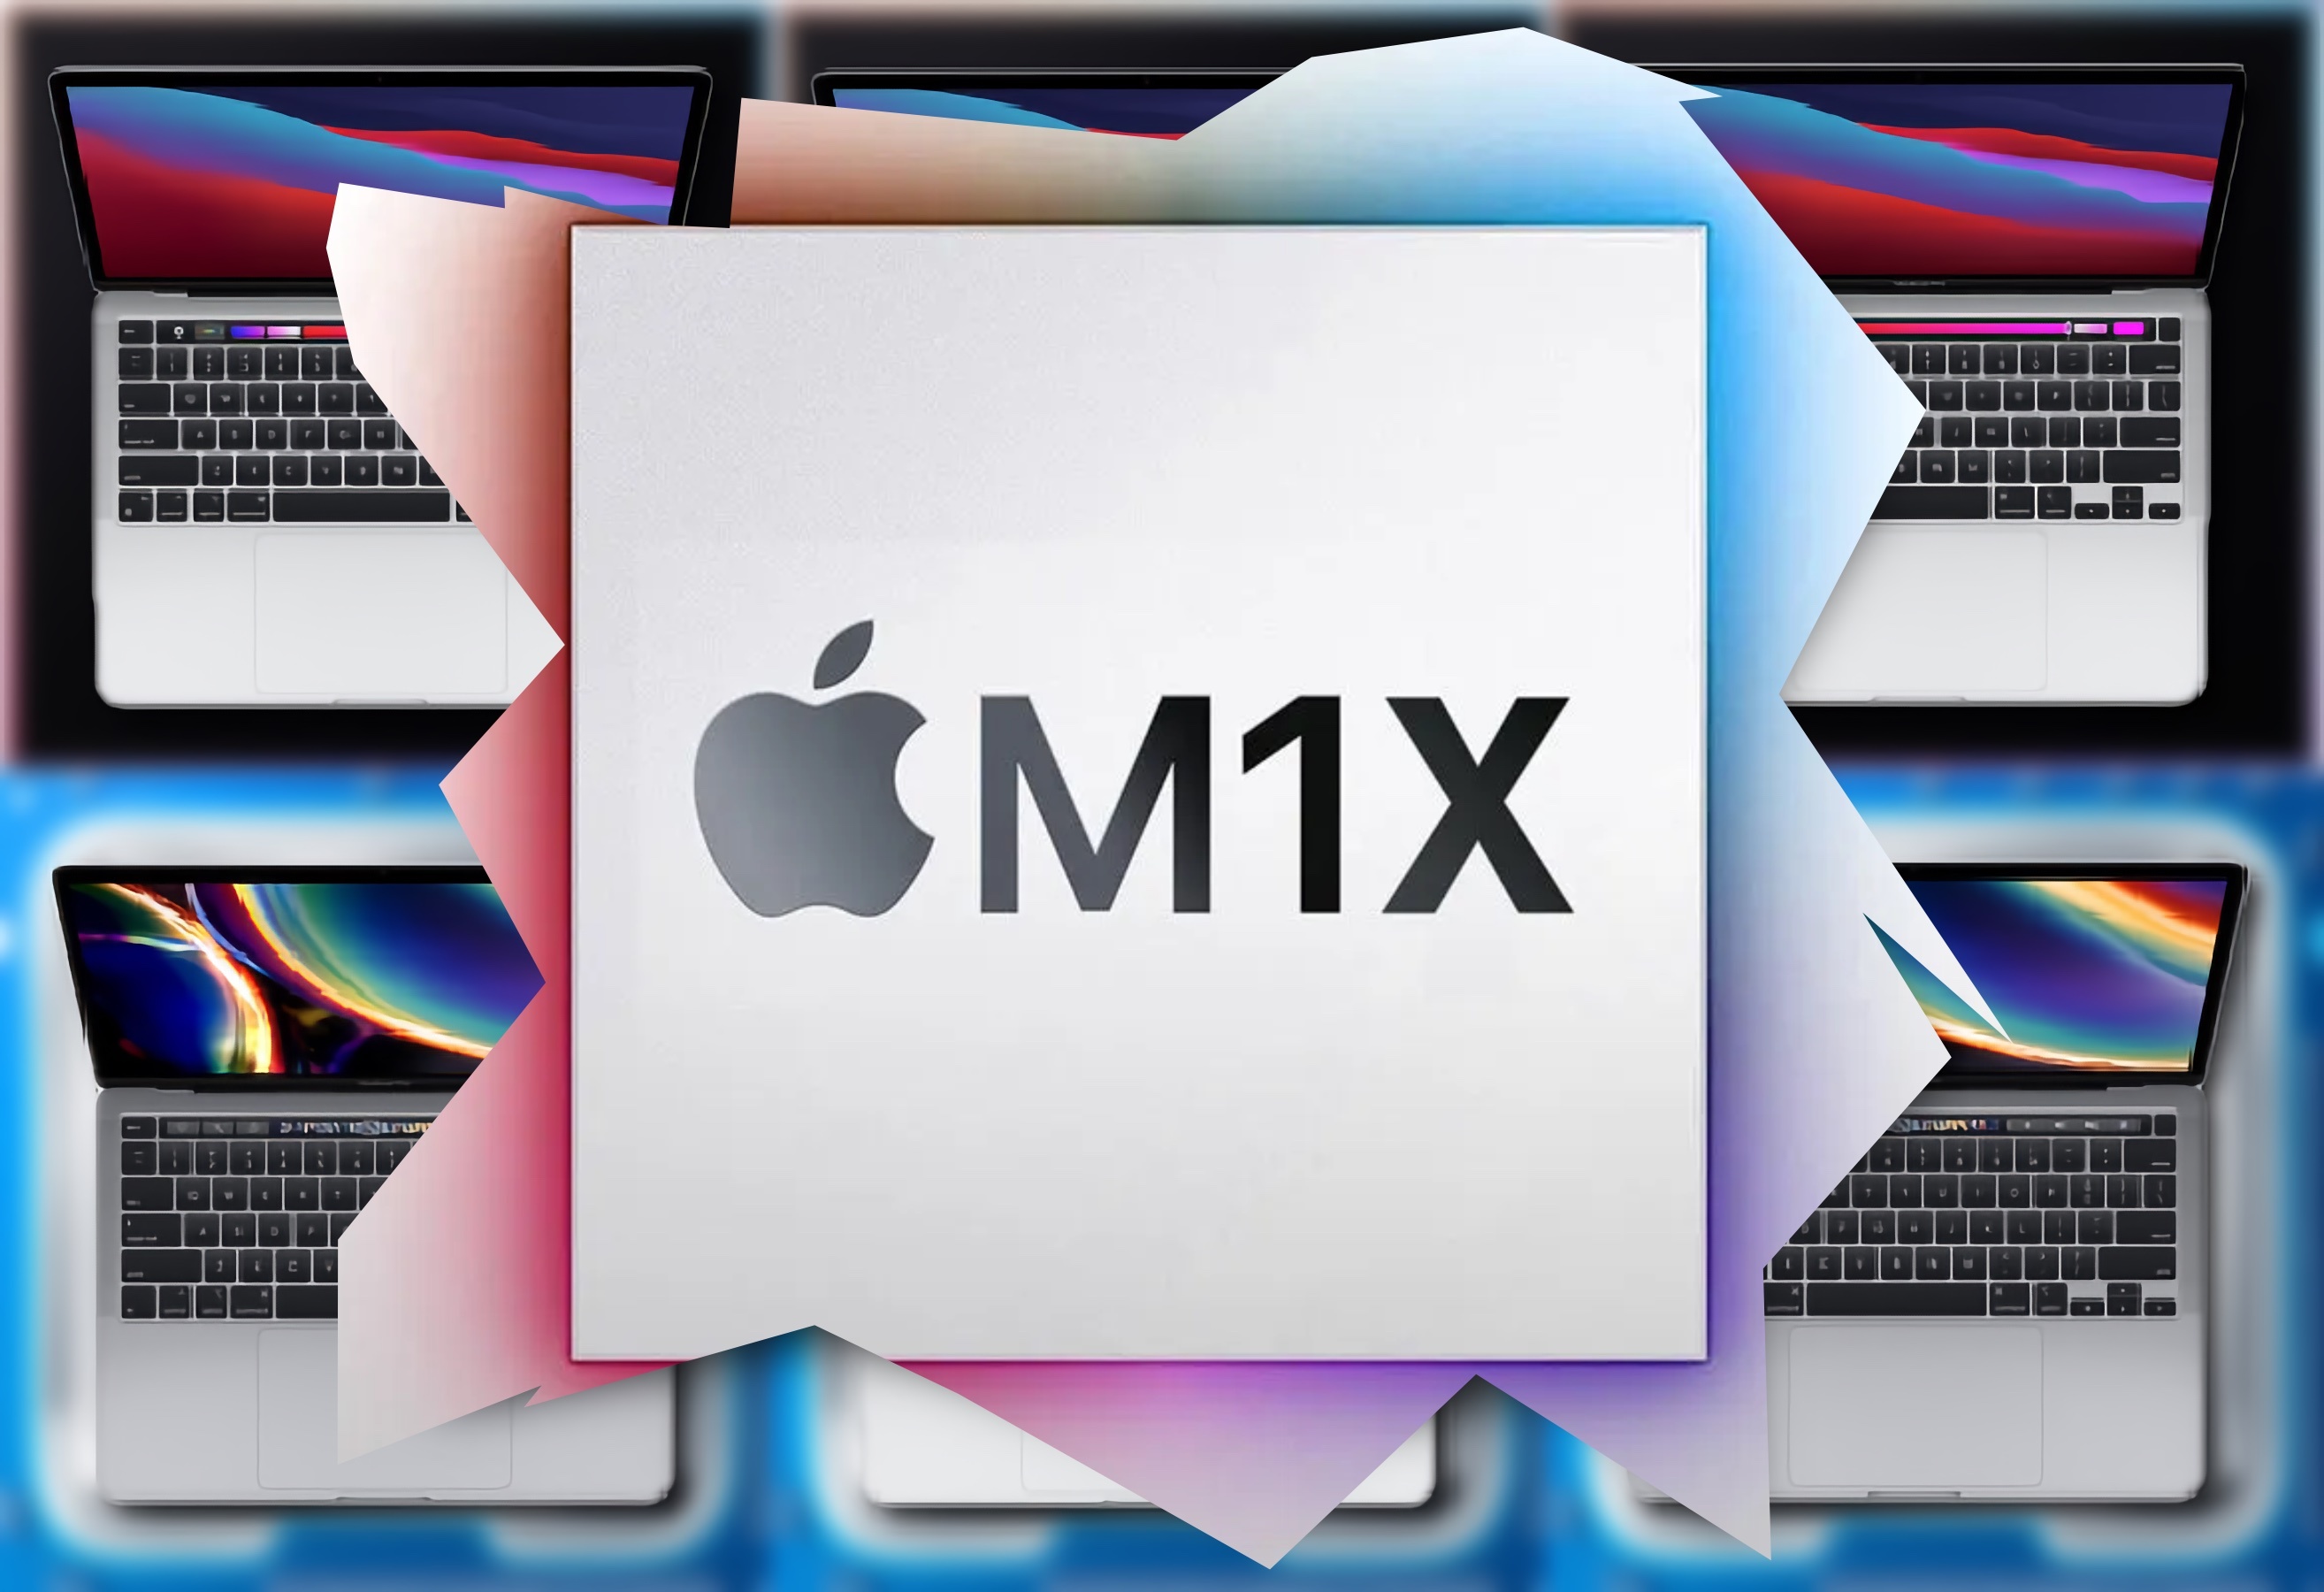   apple macbook pro m1x    